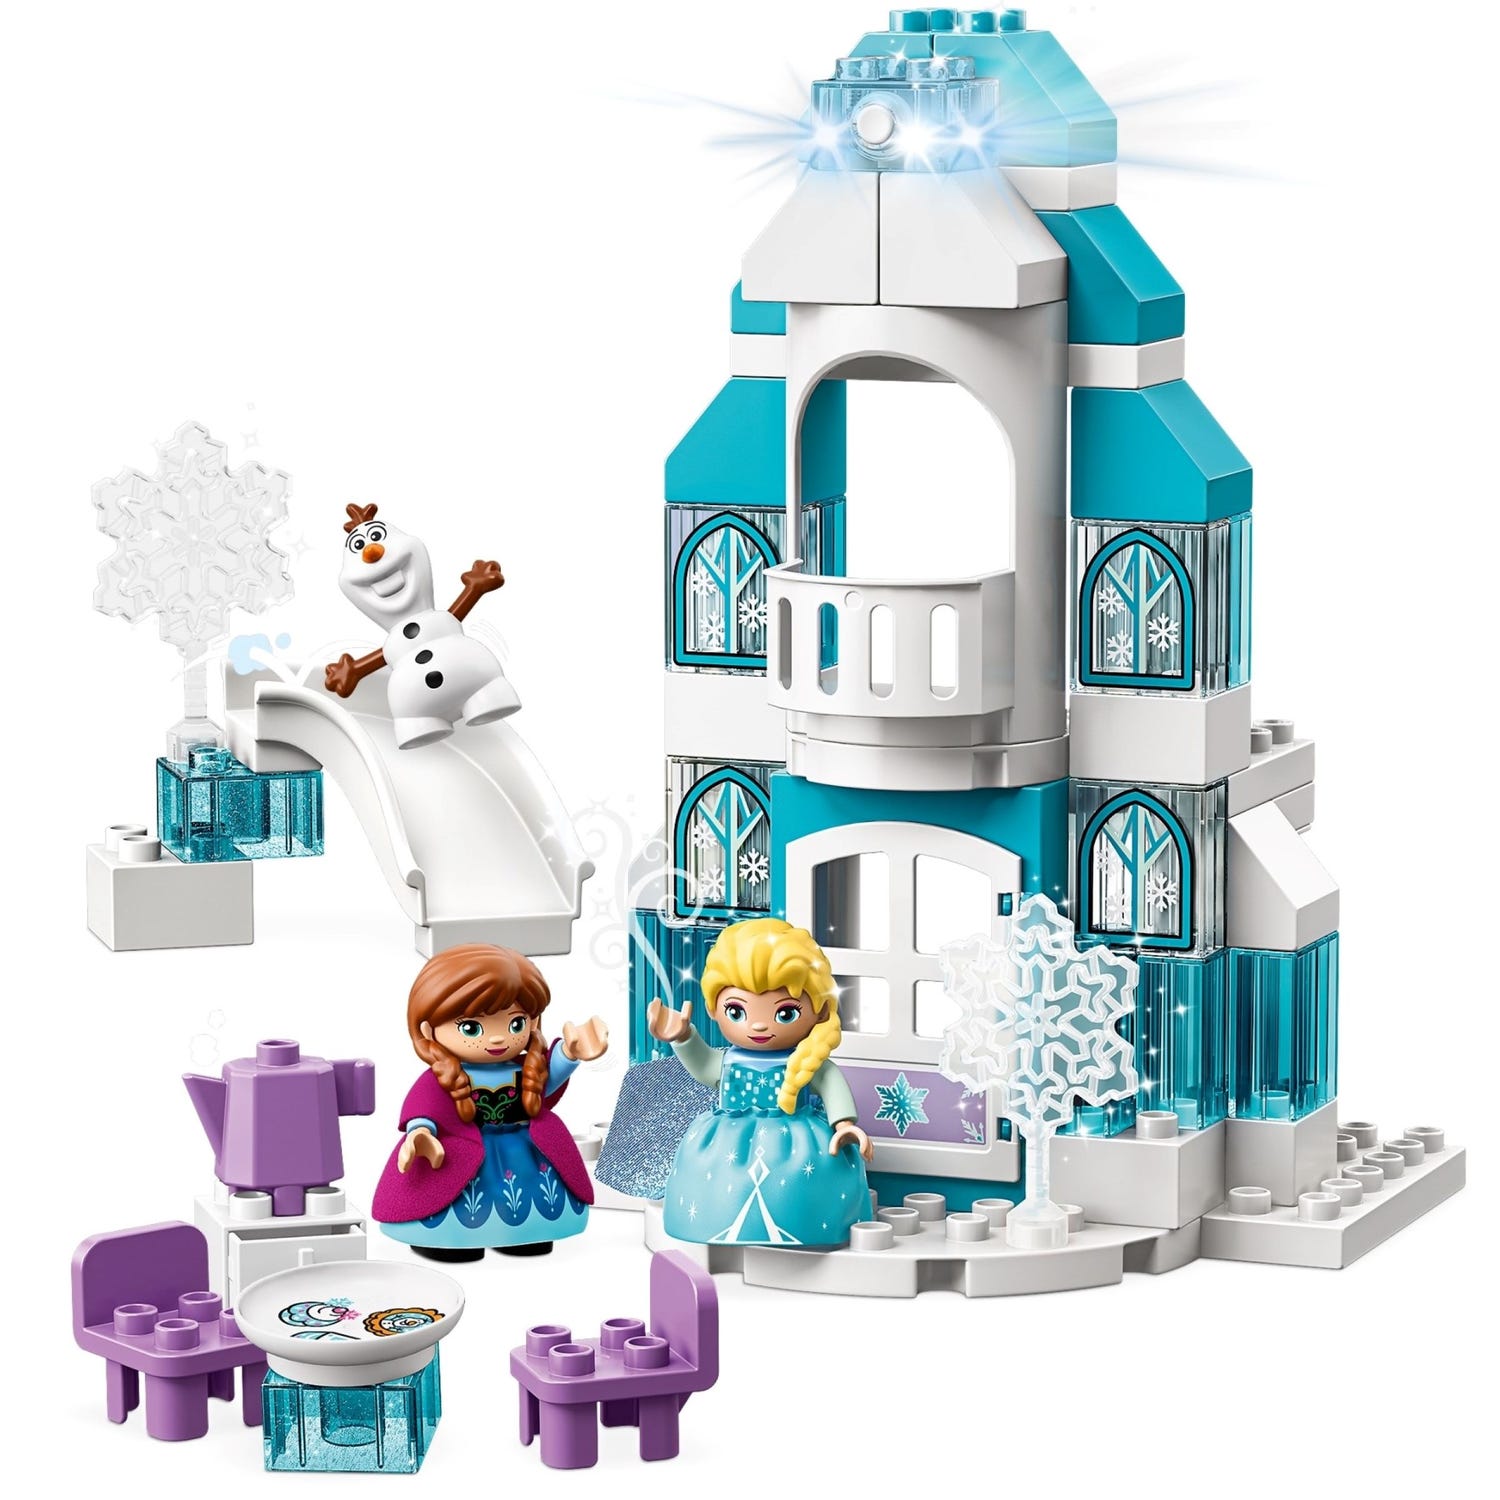 Normal fajance pianist Frozen Ice Castle 10899 | Disney™ | Buy online at the Official LEGO® Shop US